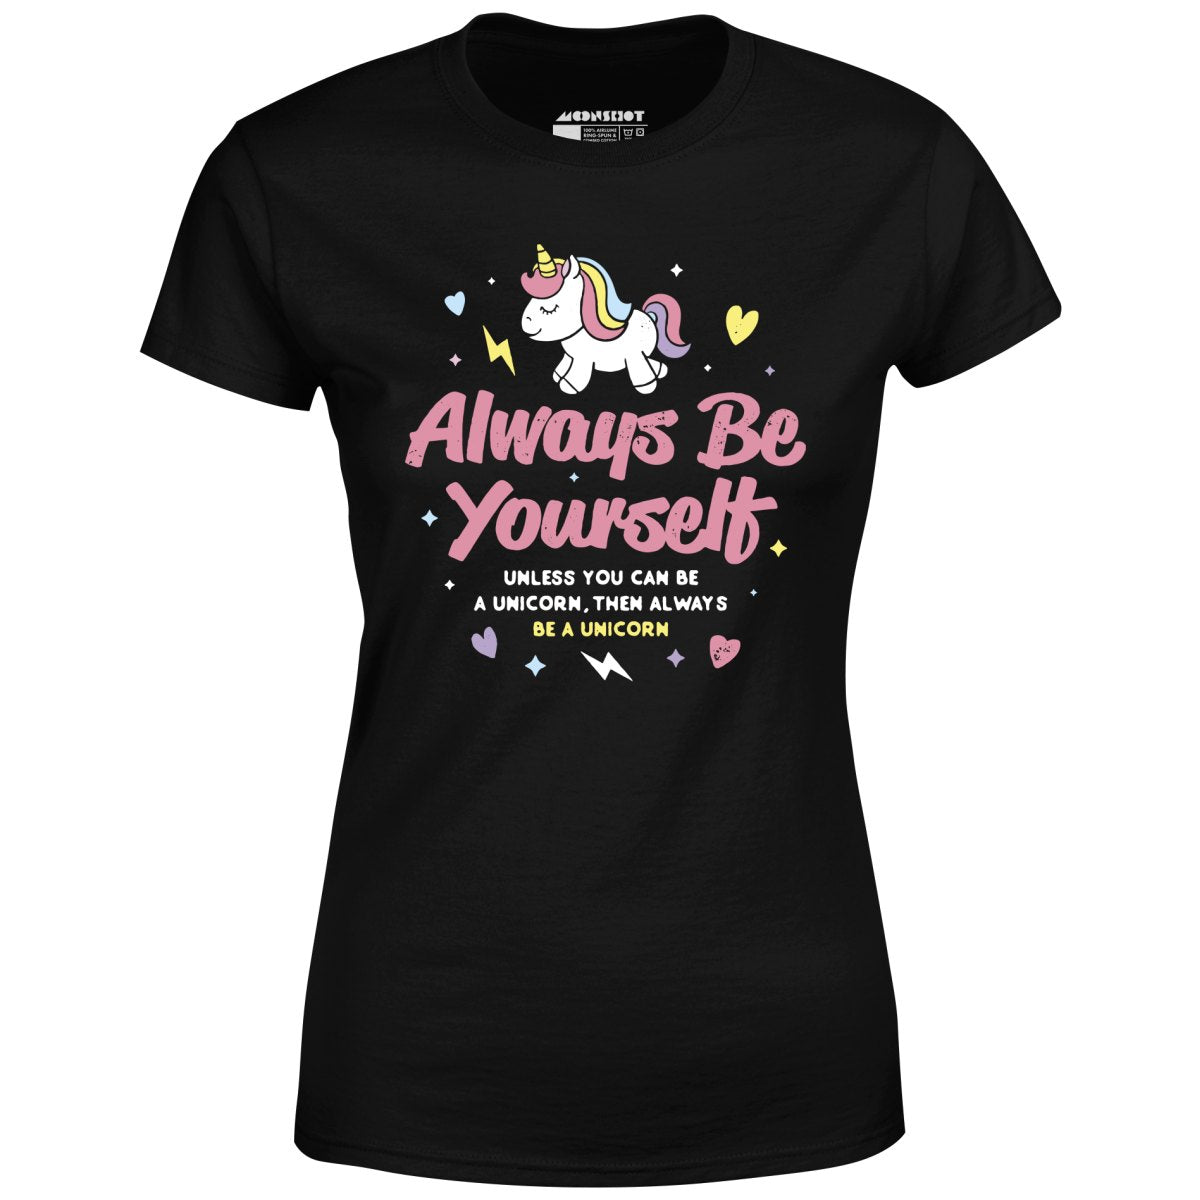 Always Be Yourself - Unicorn - Women's T-Shirt